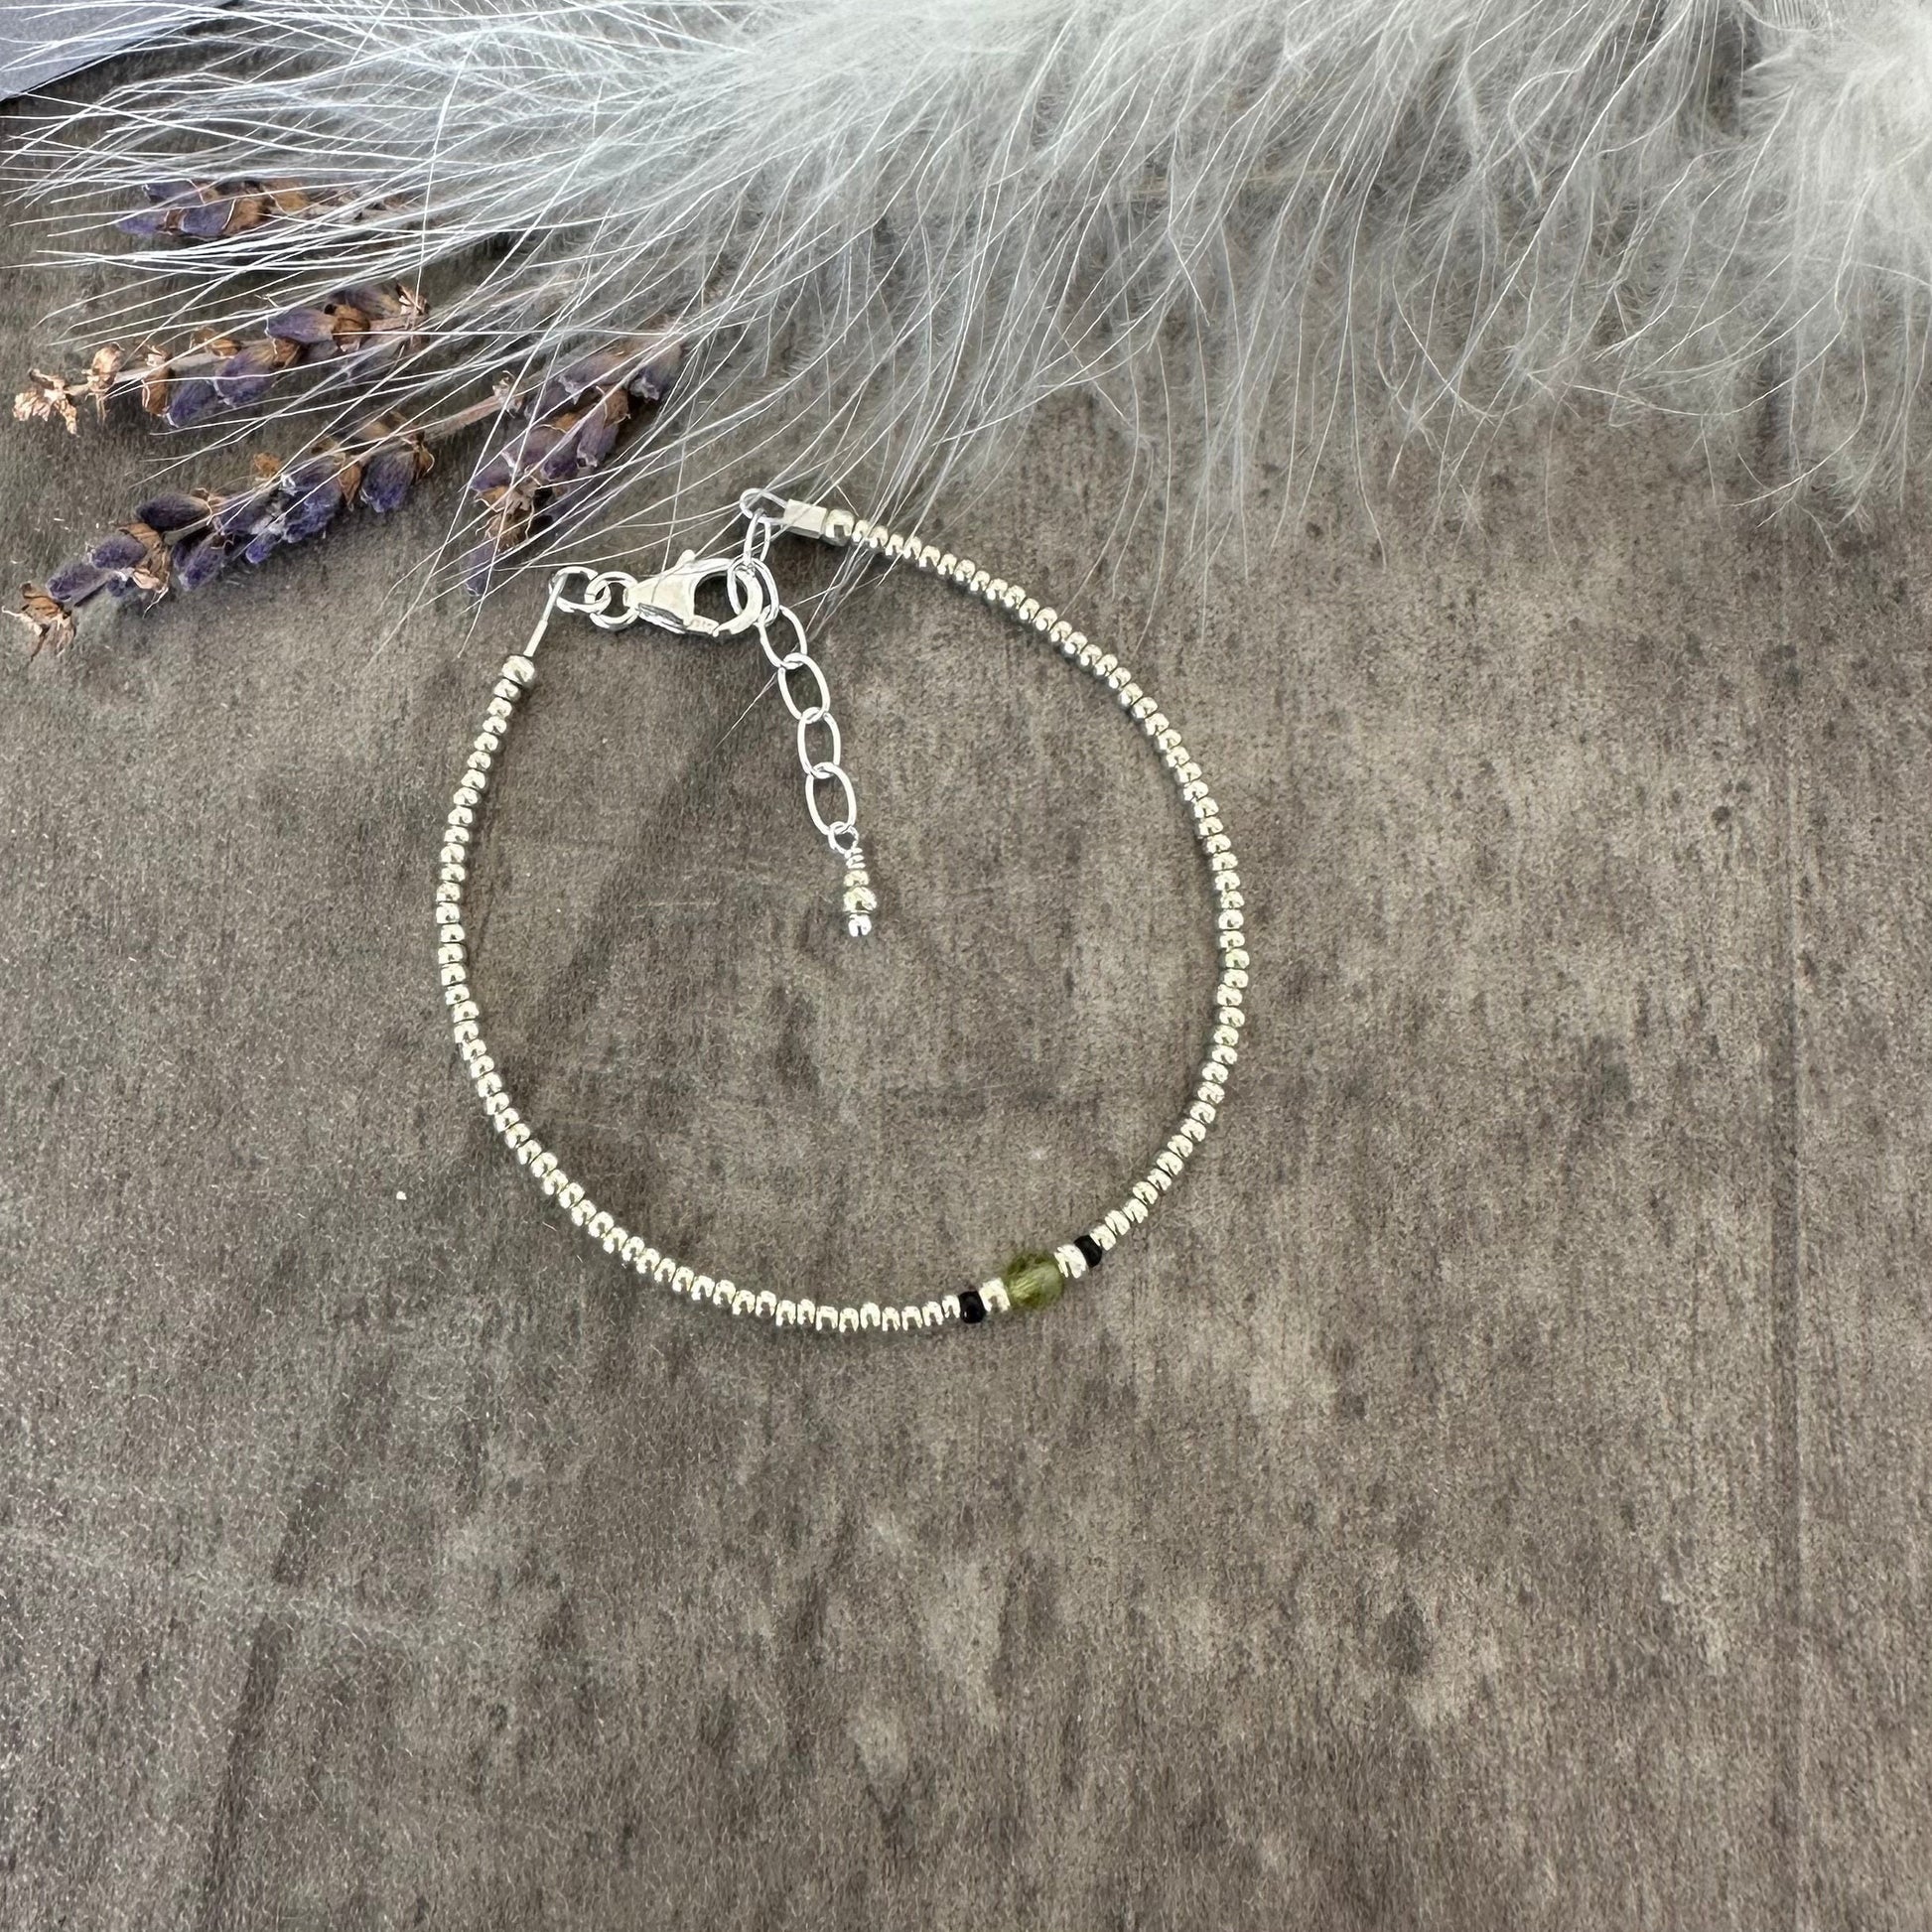 Birthstone seed bead bracelet